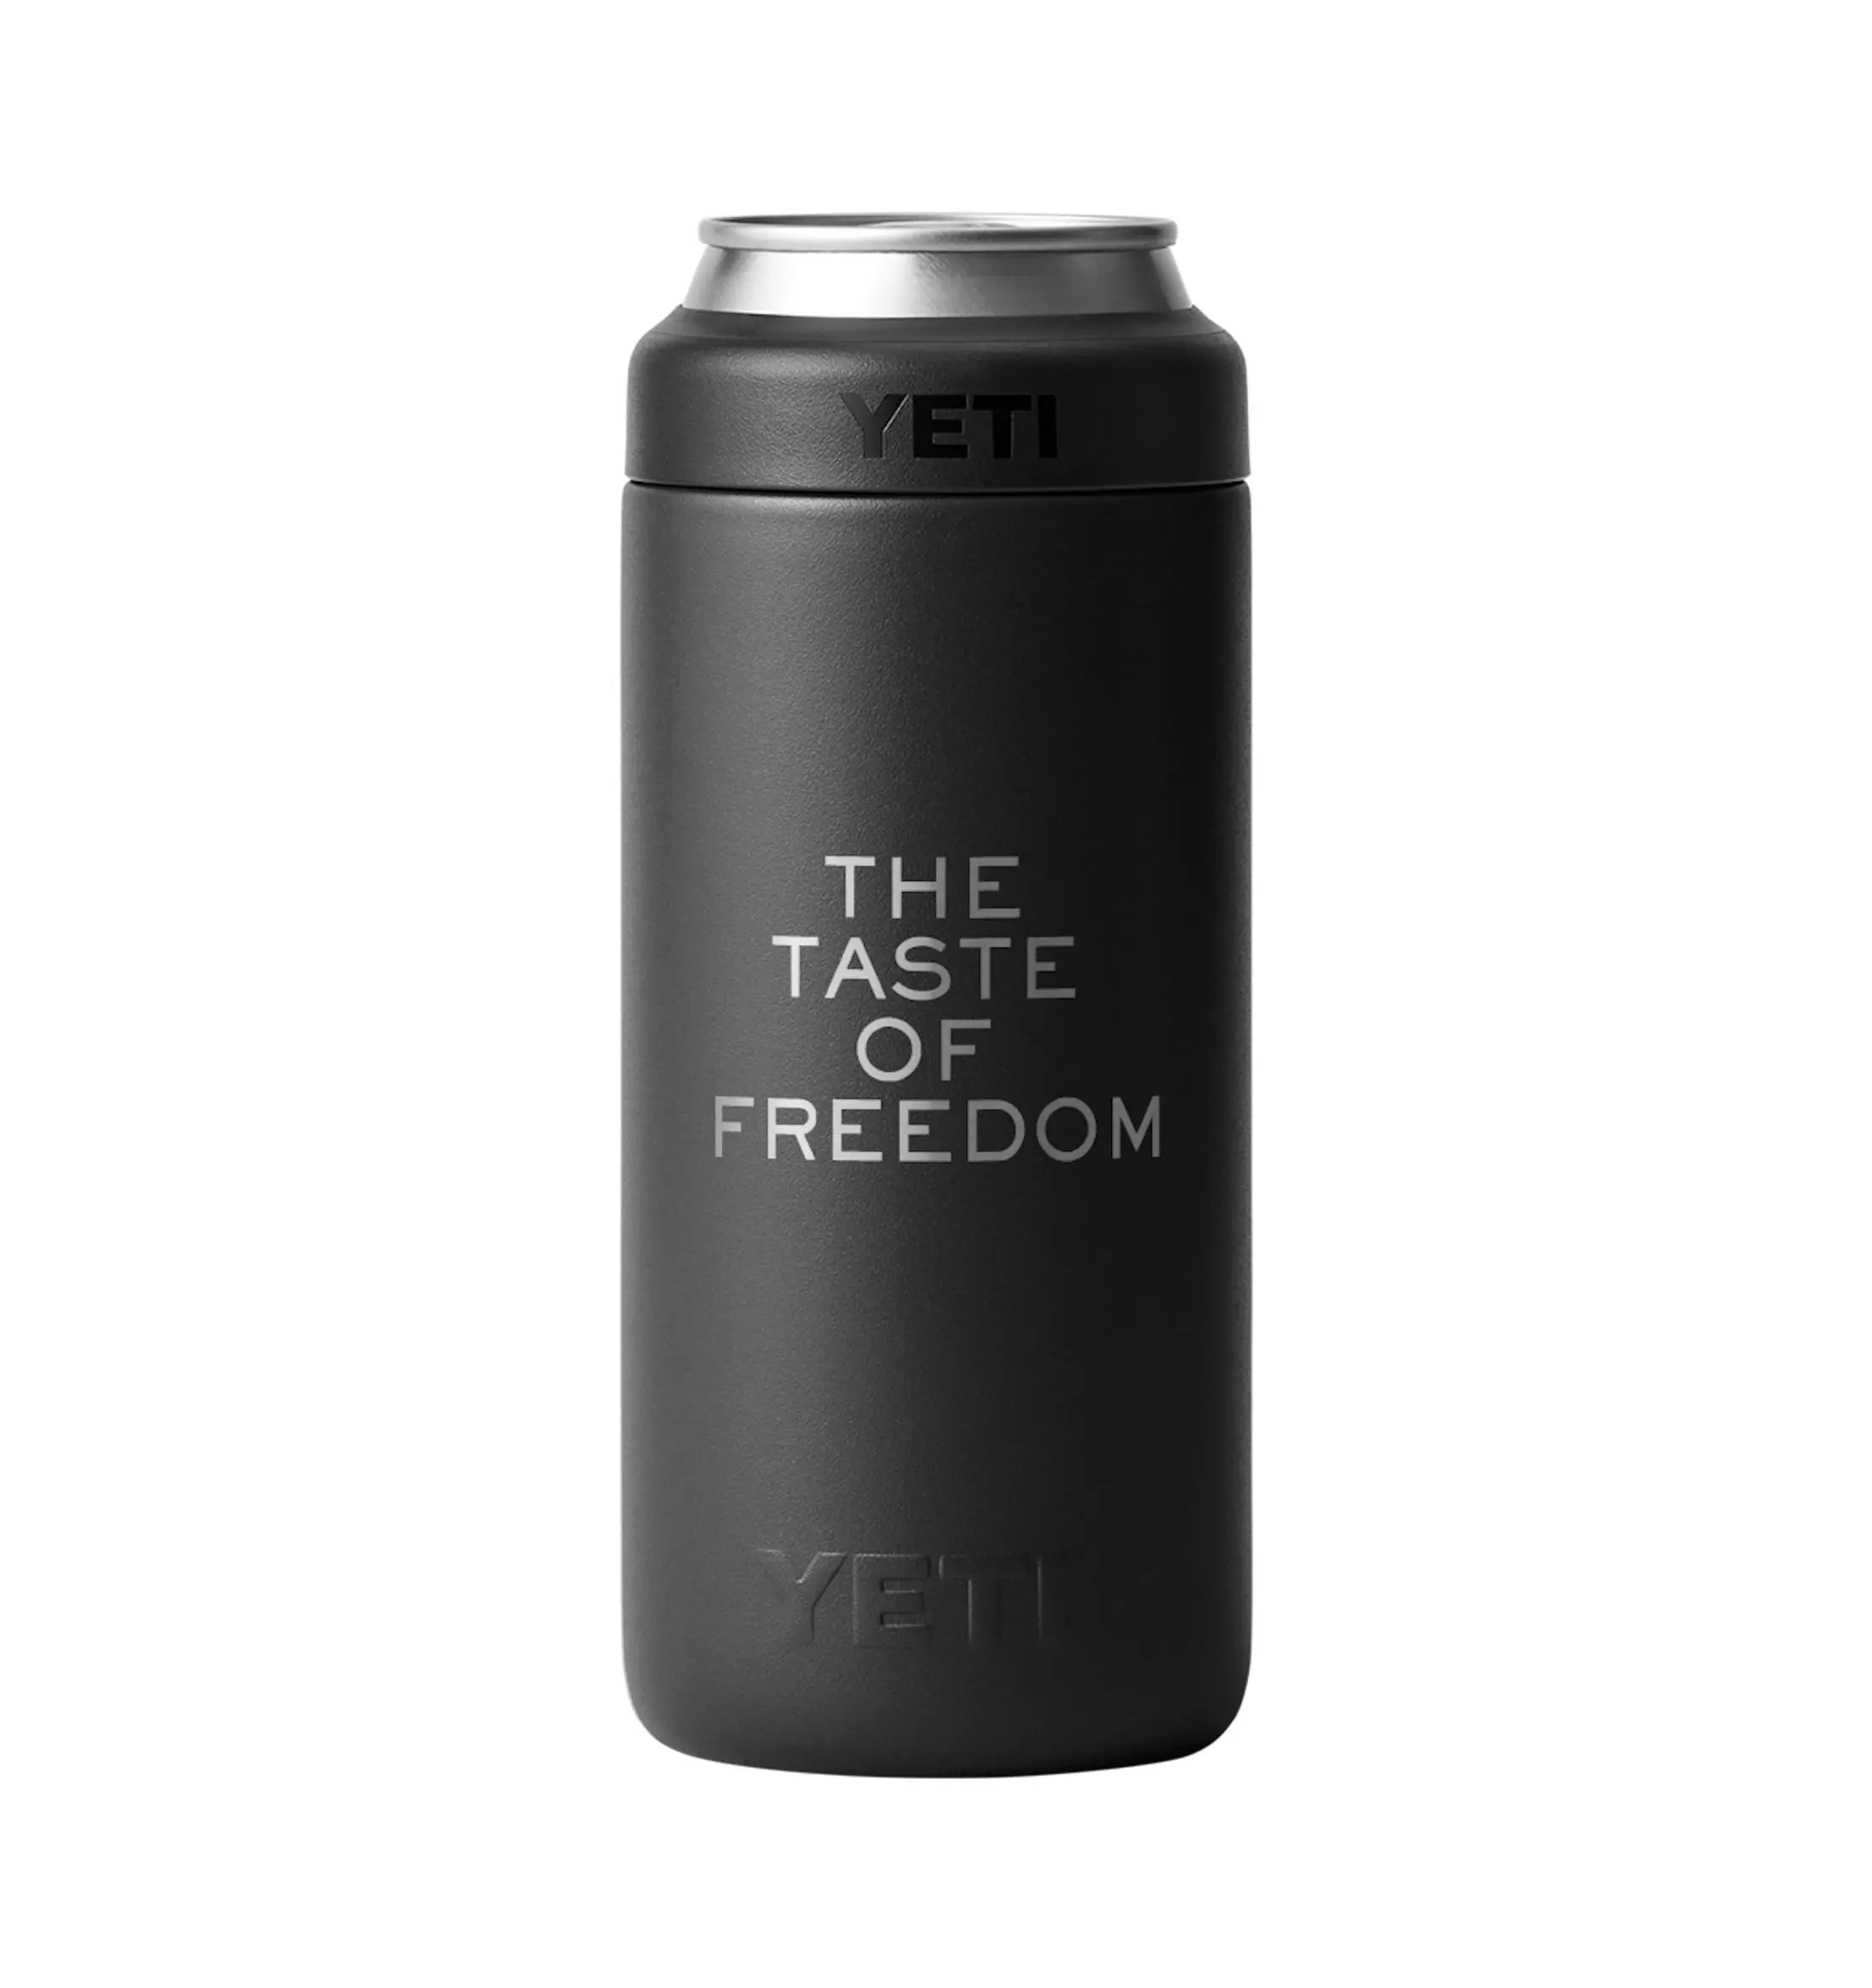 YETI "TASTE OF FREEDOM" Can Cooler Freedom2o